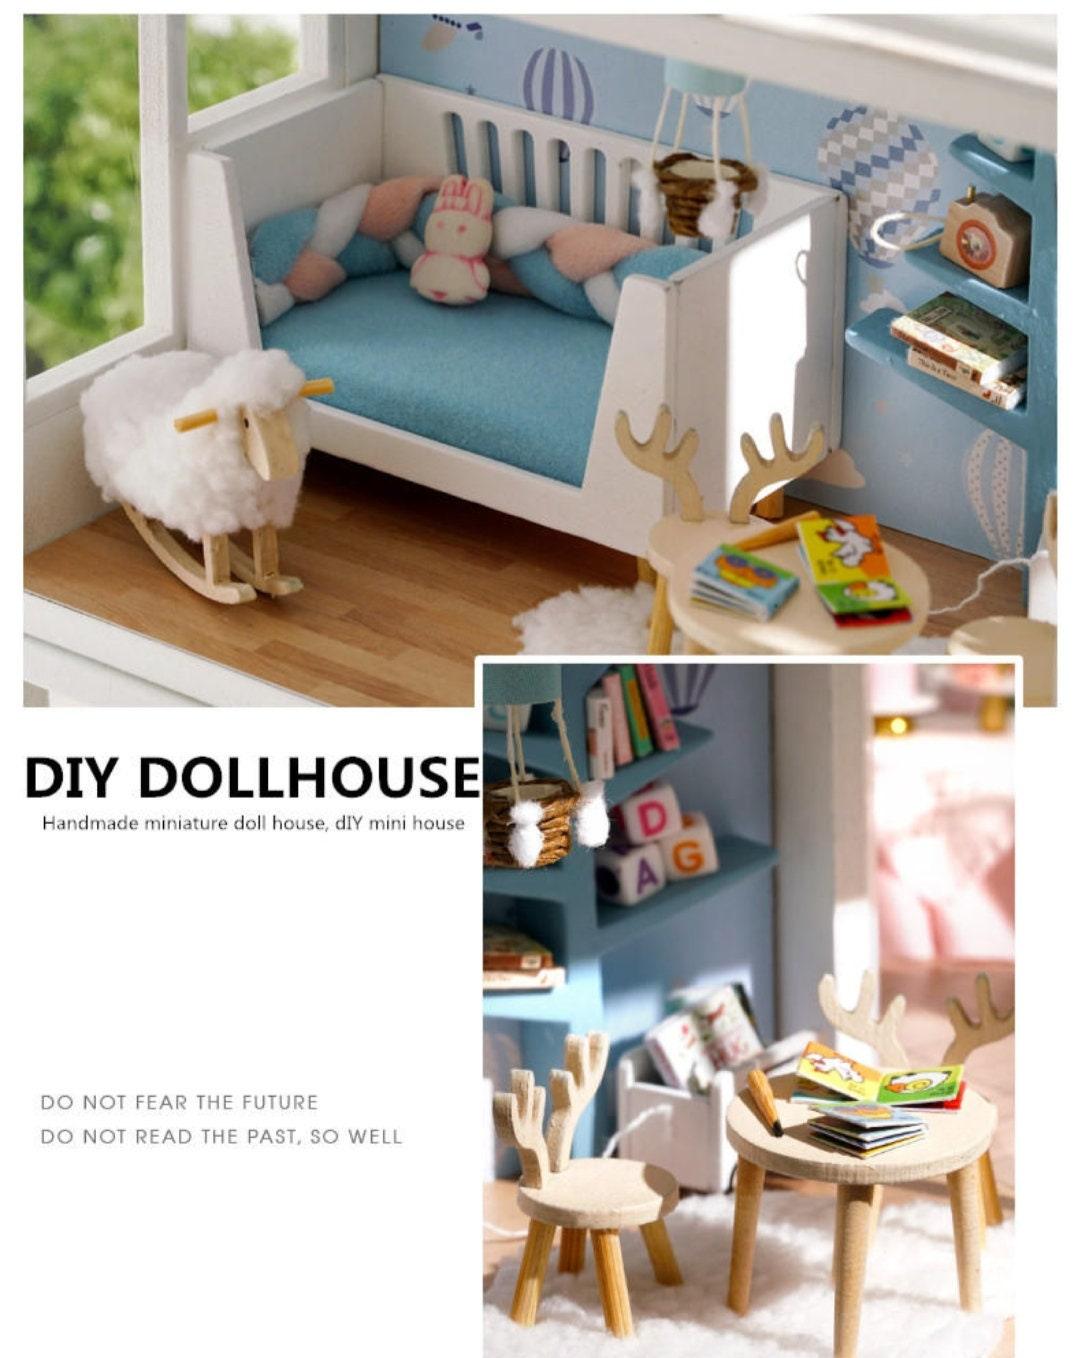 Simple Life Miniature Villa Three Floor Dollhouse with Furniture, DIY Large Dollhouse Kit With Furniture Pink Creative Room Idea